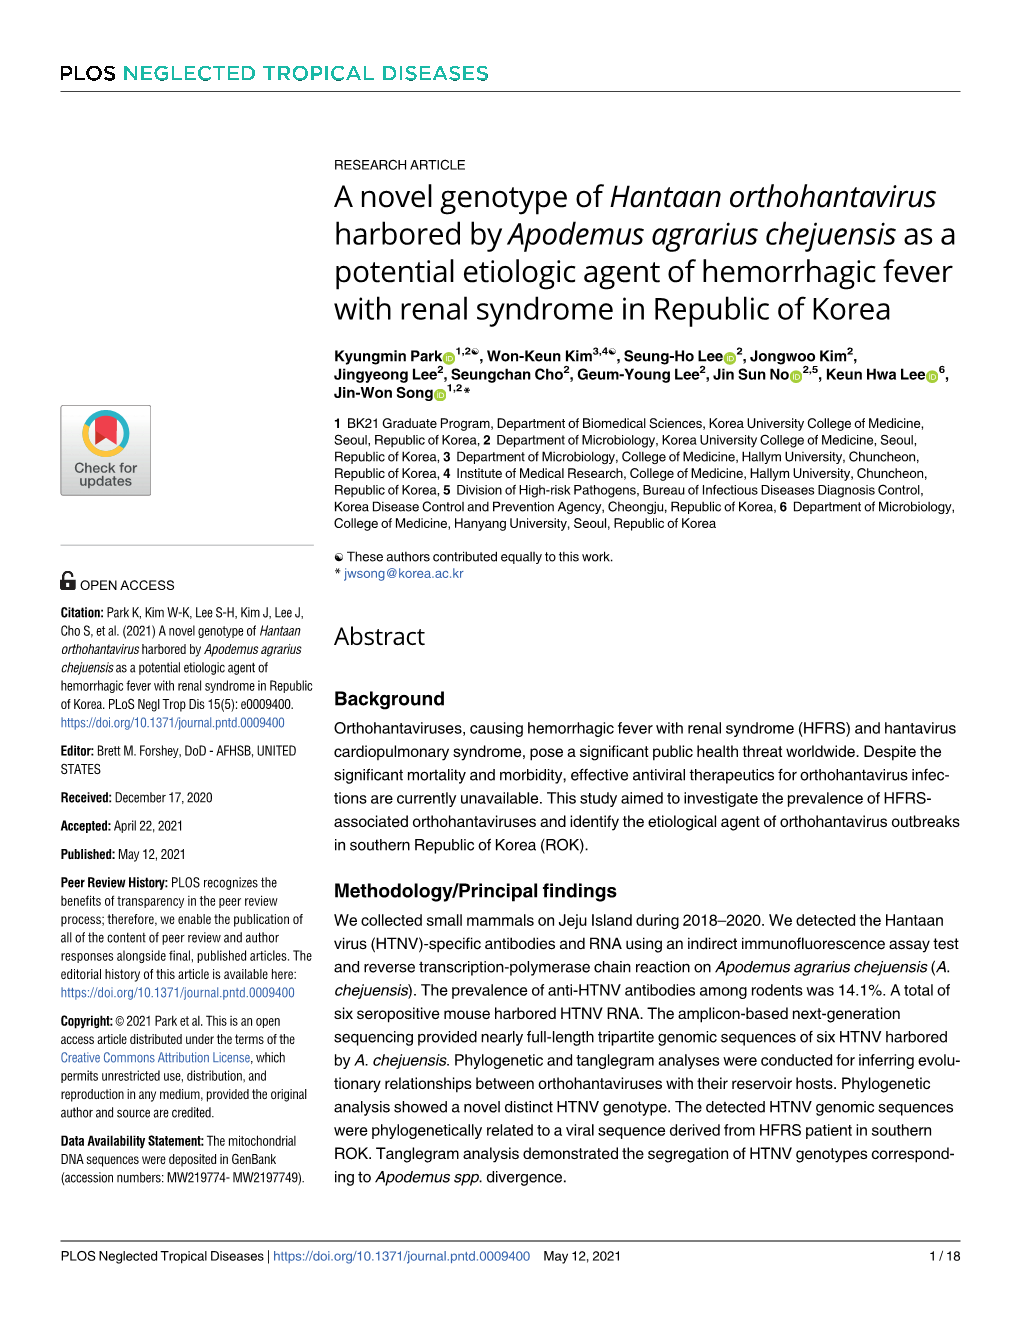 A Novel Genotype of Hantaan Orthohantavirus Harbored By